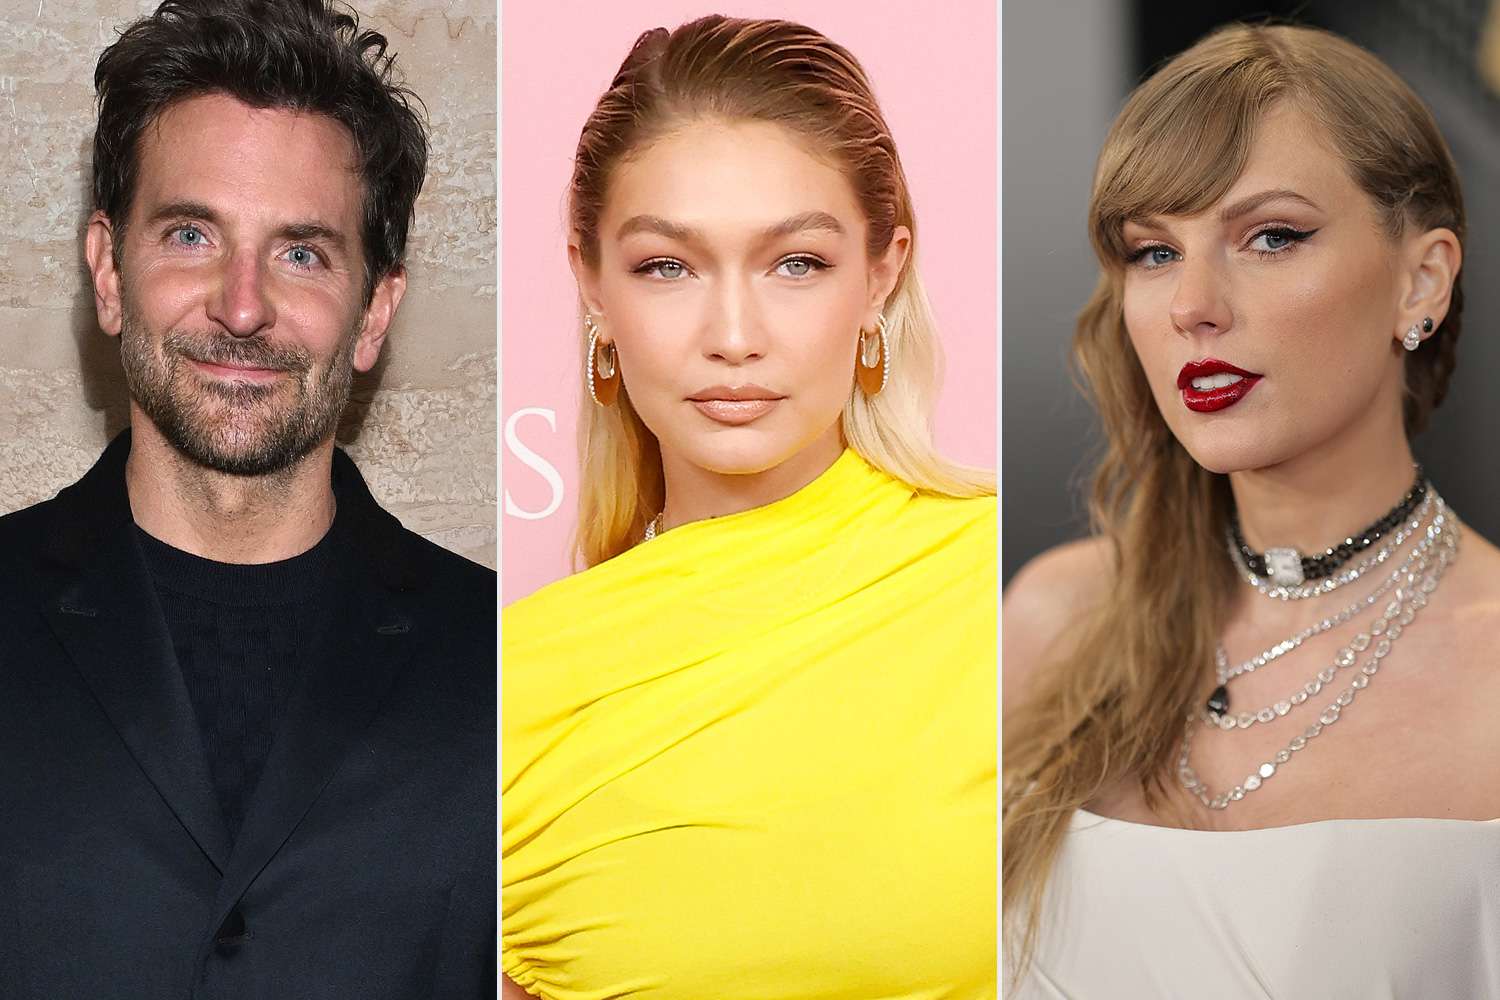 Bradley Cooper and Gigi Hadid Enjoy Date Night at Taylor Swift’s Eras Tour Stop in Paris